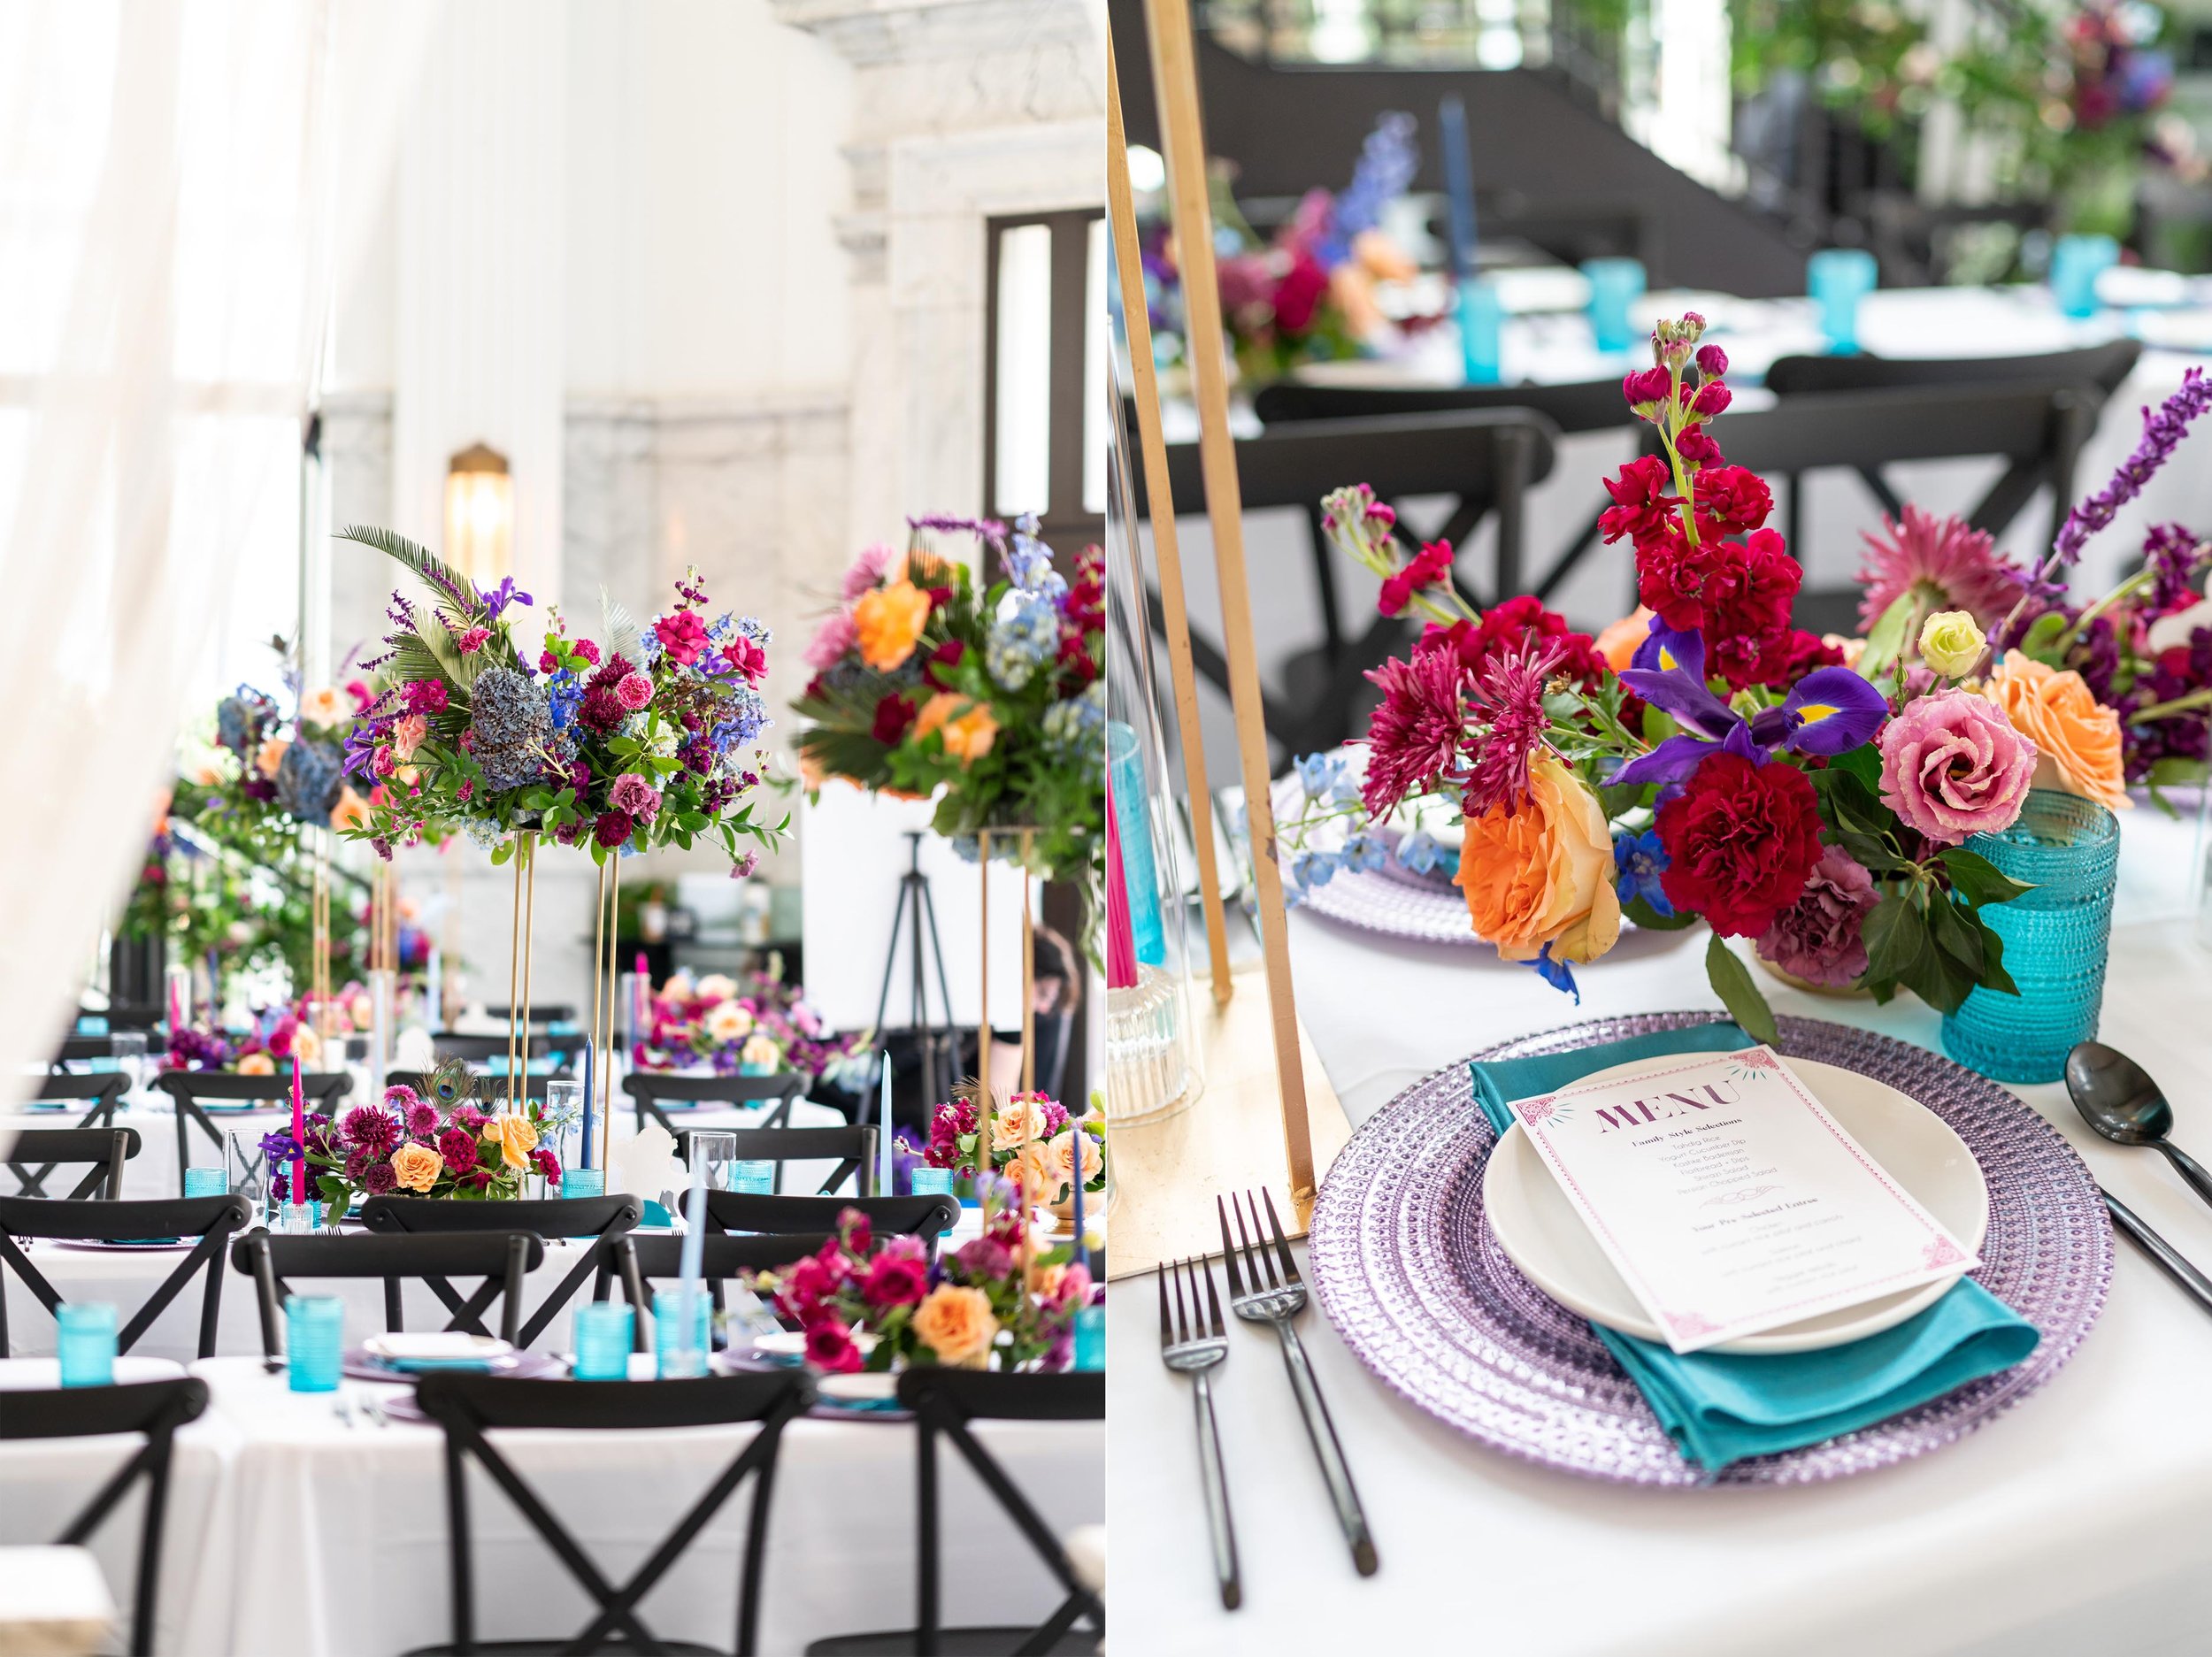 Tablescapes and colorful fun wedding decor ideas at citizens ballroom bank